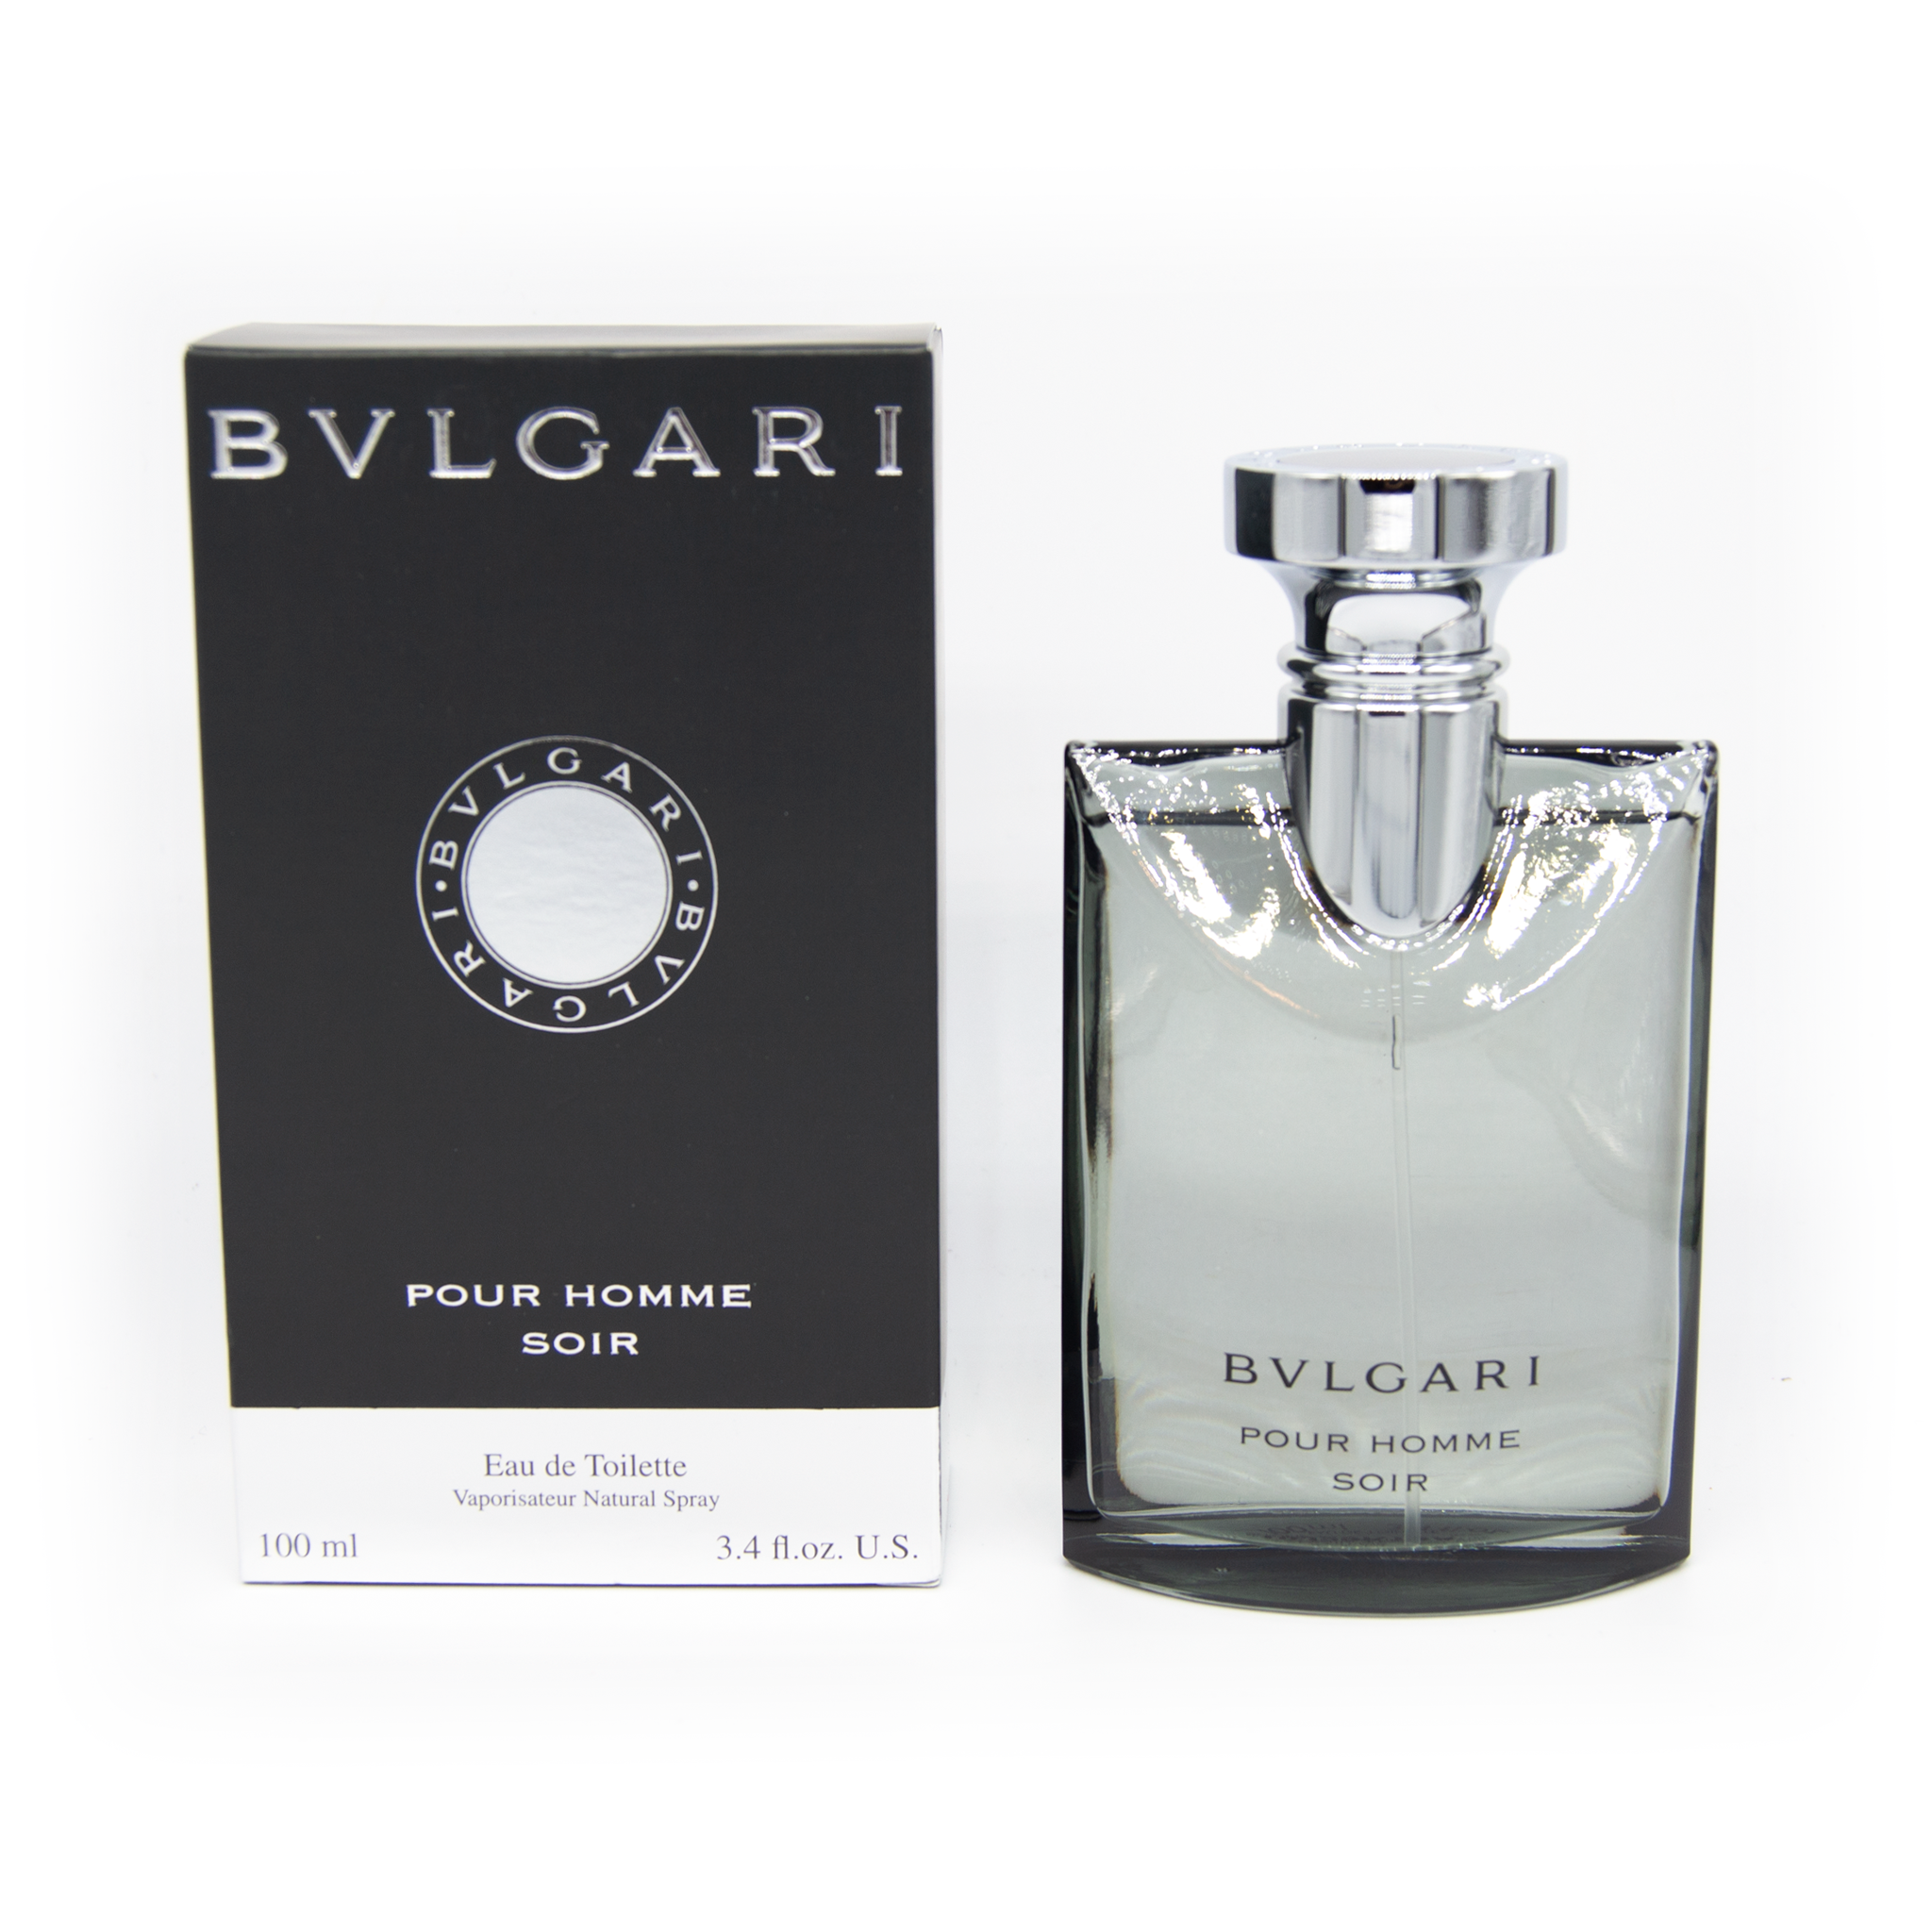 Shop Bvlgari Man Extreme Perfume online